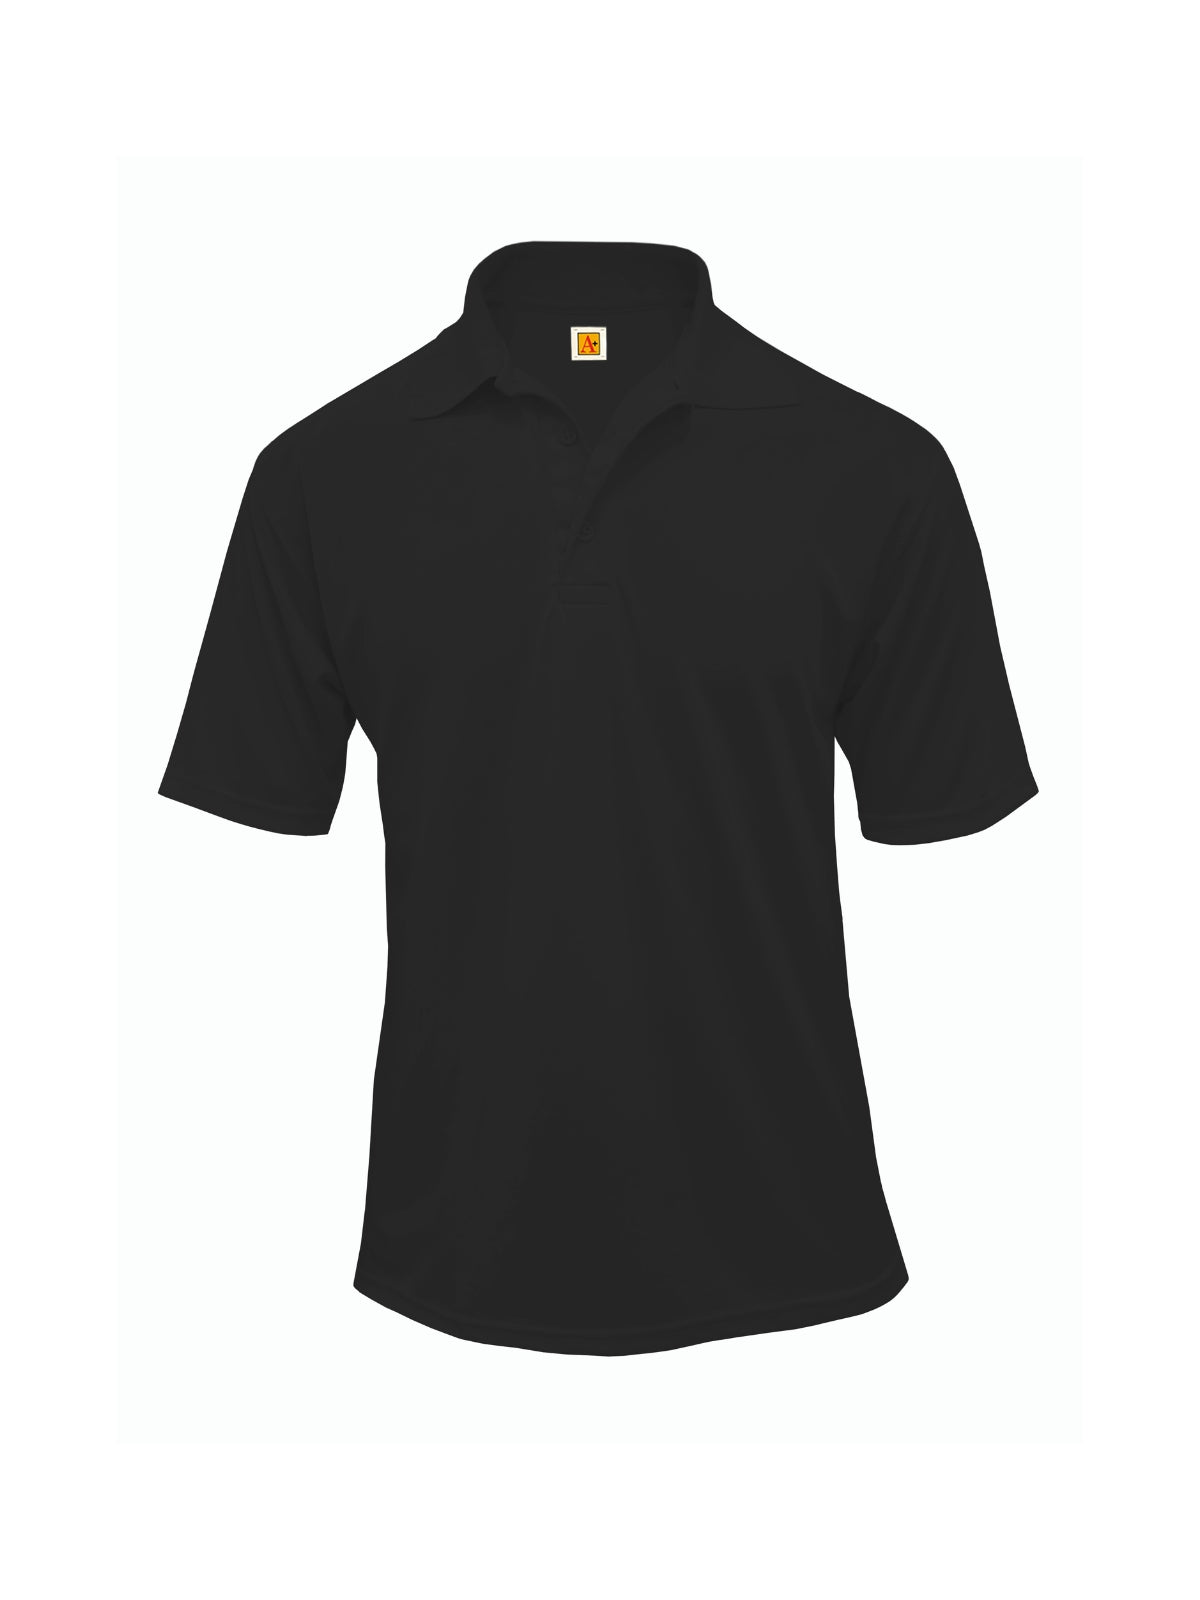 Unisex Short Sleeve Dri-Fit Polo - 8953 - Black